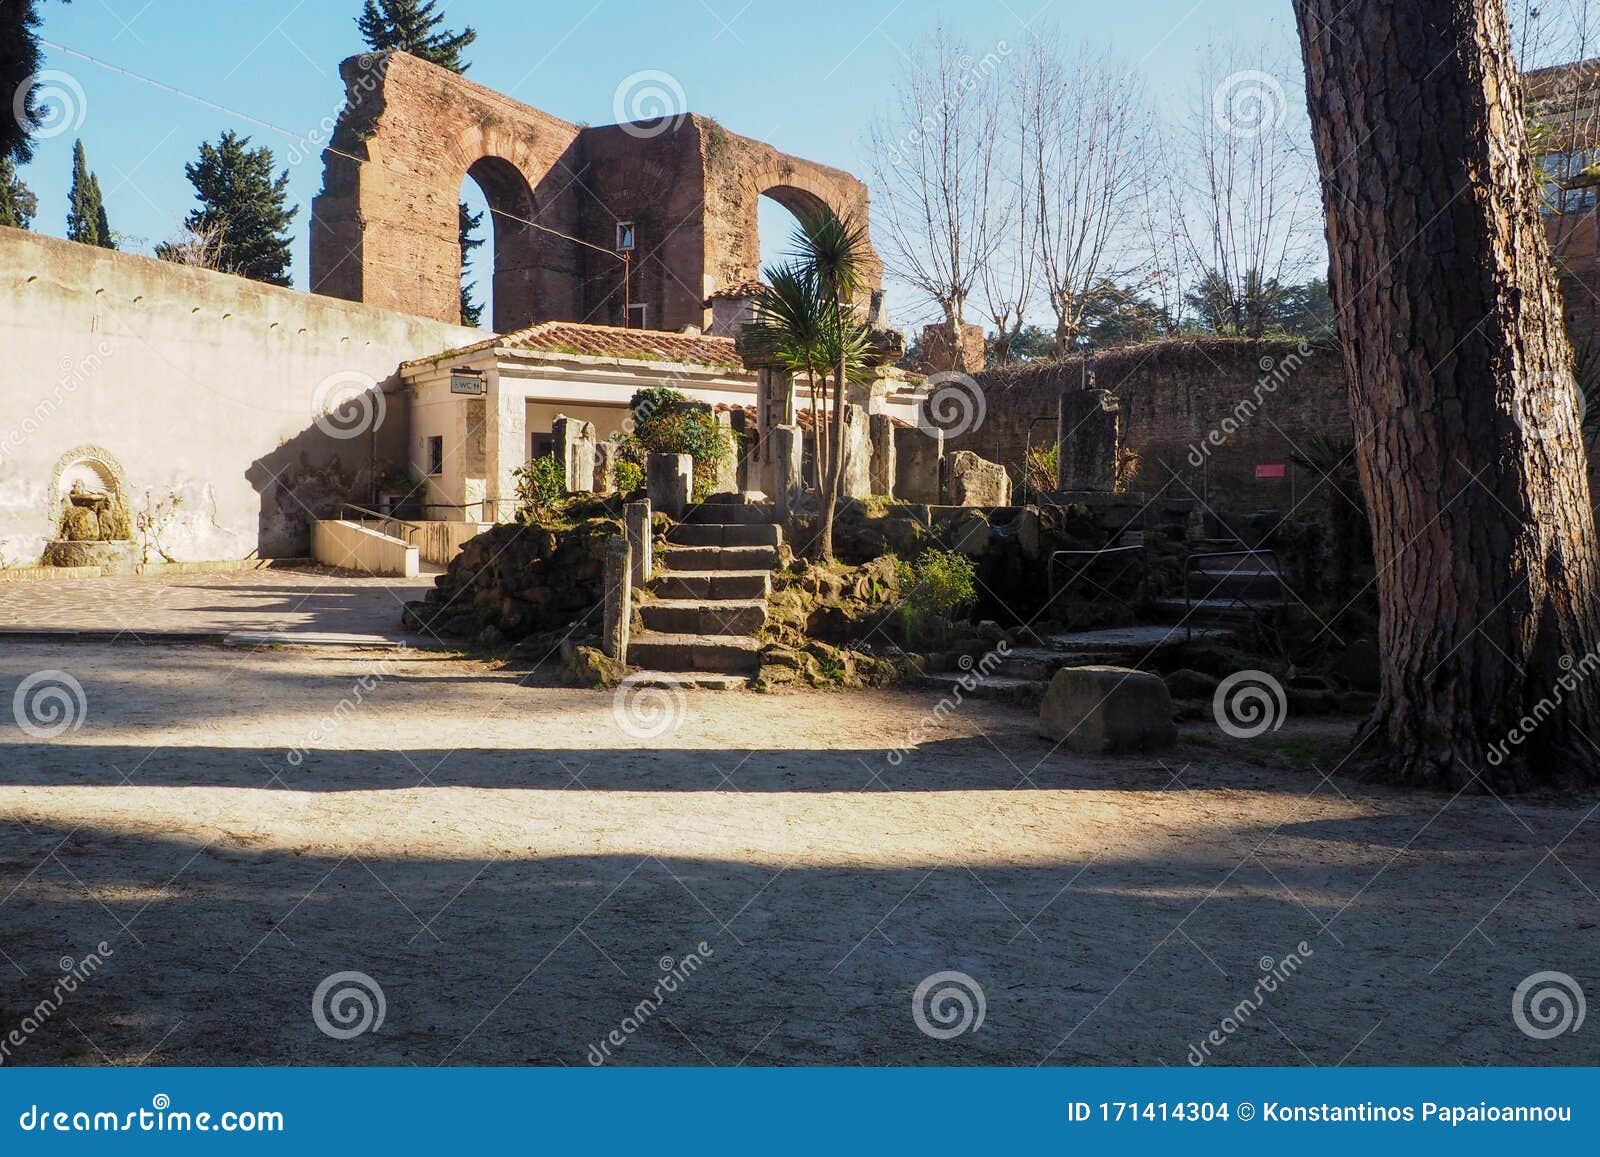 Villa Celimontana in Rome, Italy Stock Photo - Image of museum, rome ...